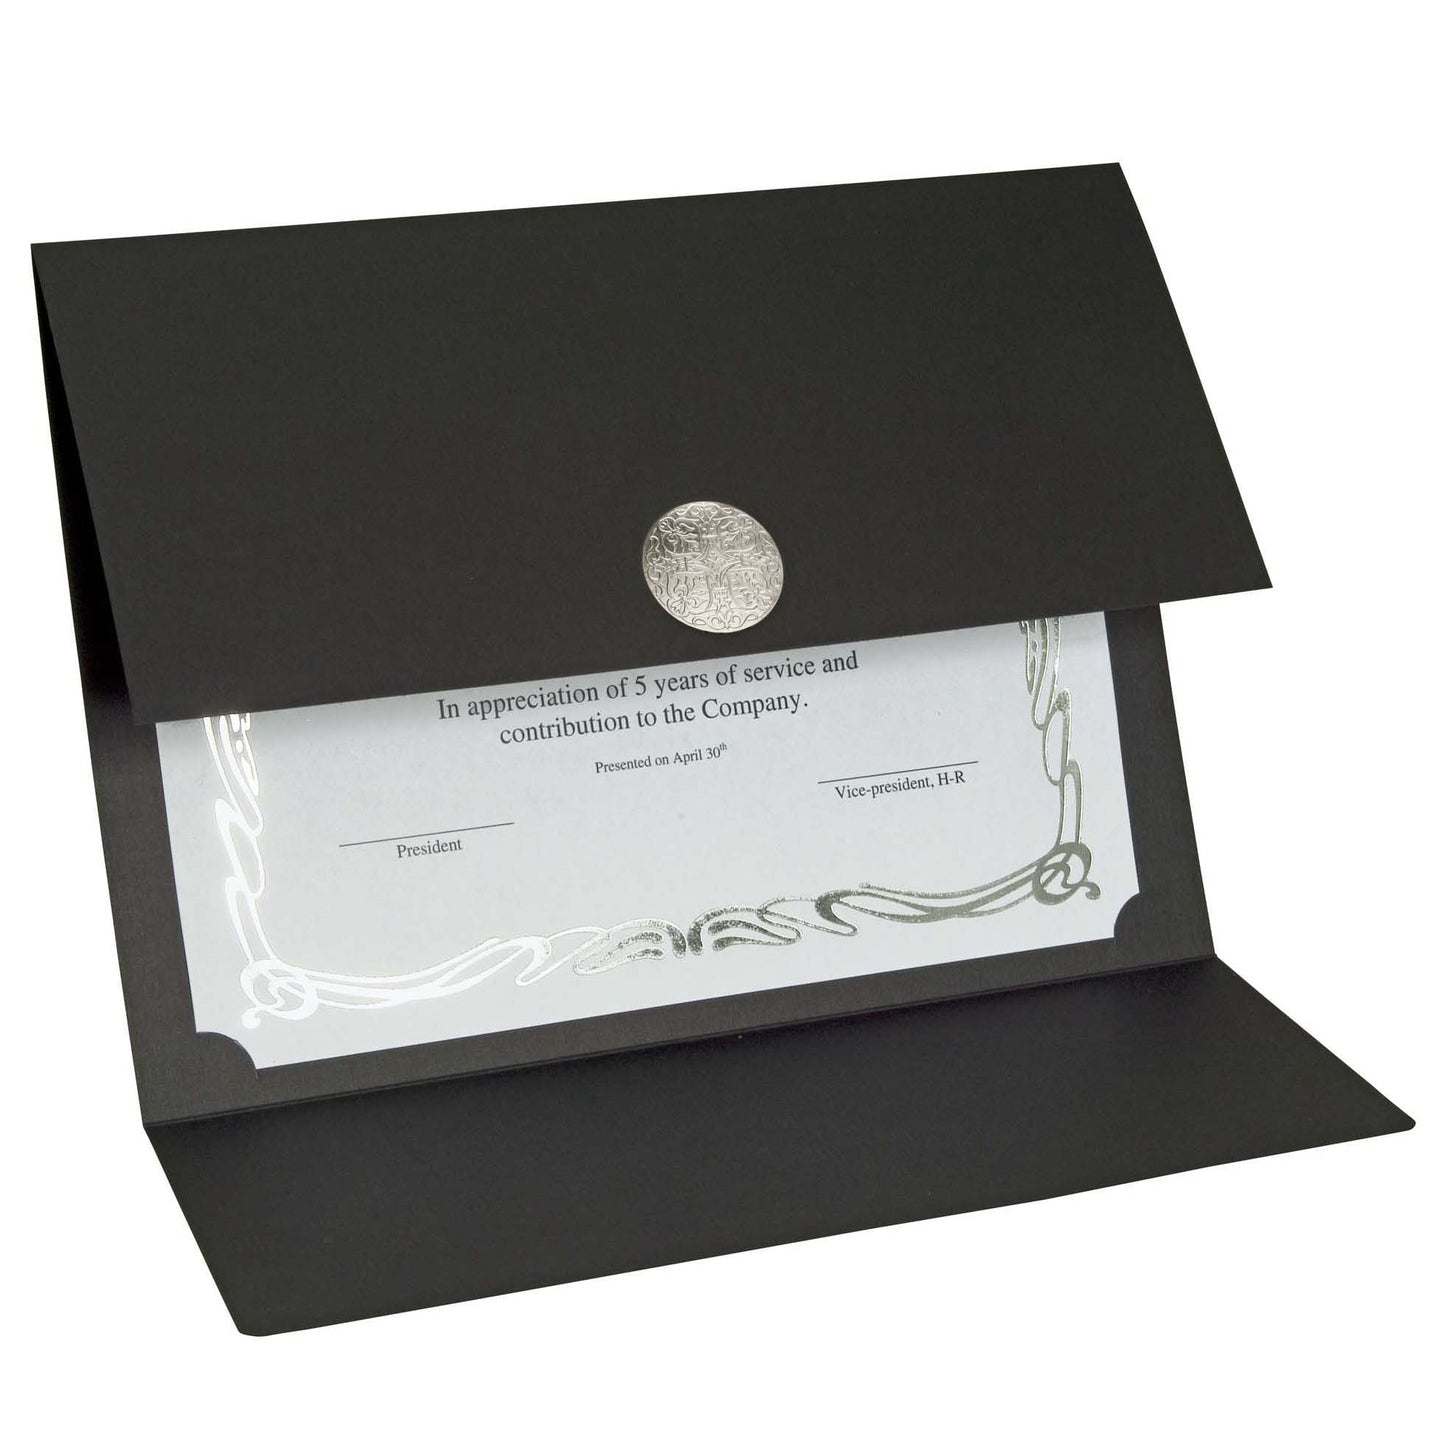 St. James® Elite™ Medallion Fold Certificate Holders, Black Linen with Silver Medallion, Pack of 5